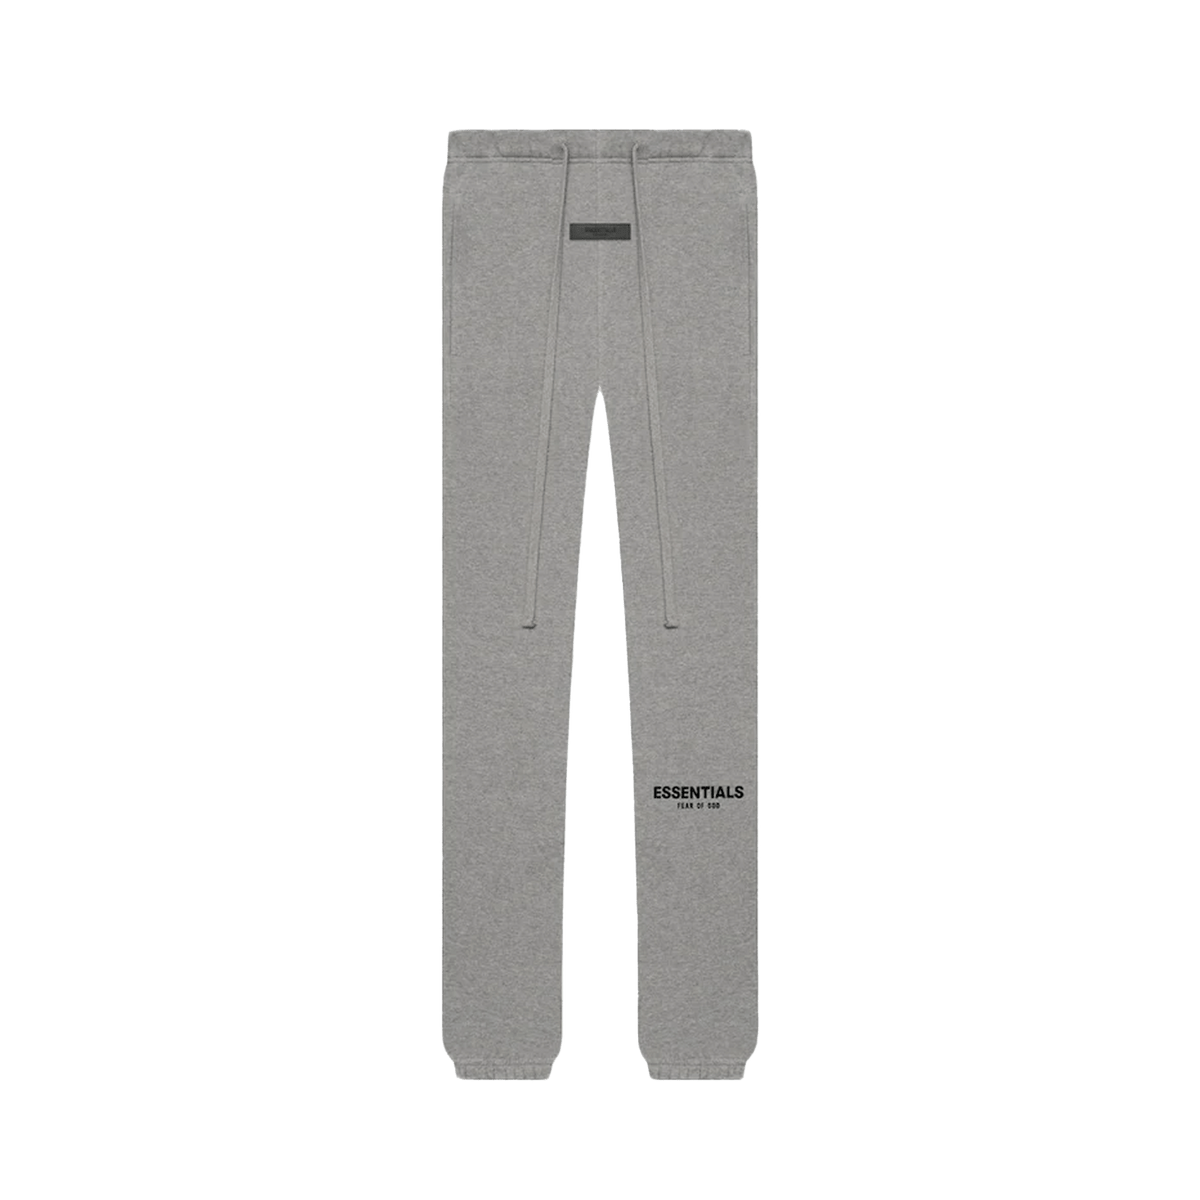 Copy of adidas tubular collegiate navy white Essentials Sweatpants 'Dark Oatmeal' (SS22) - UrlfreezeShops